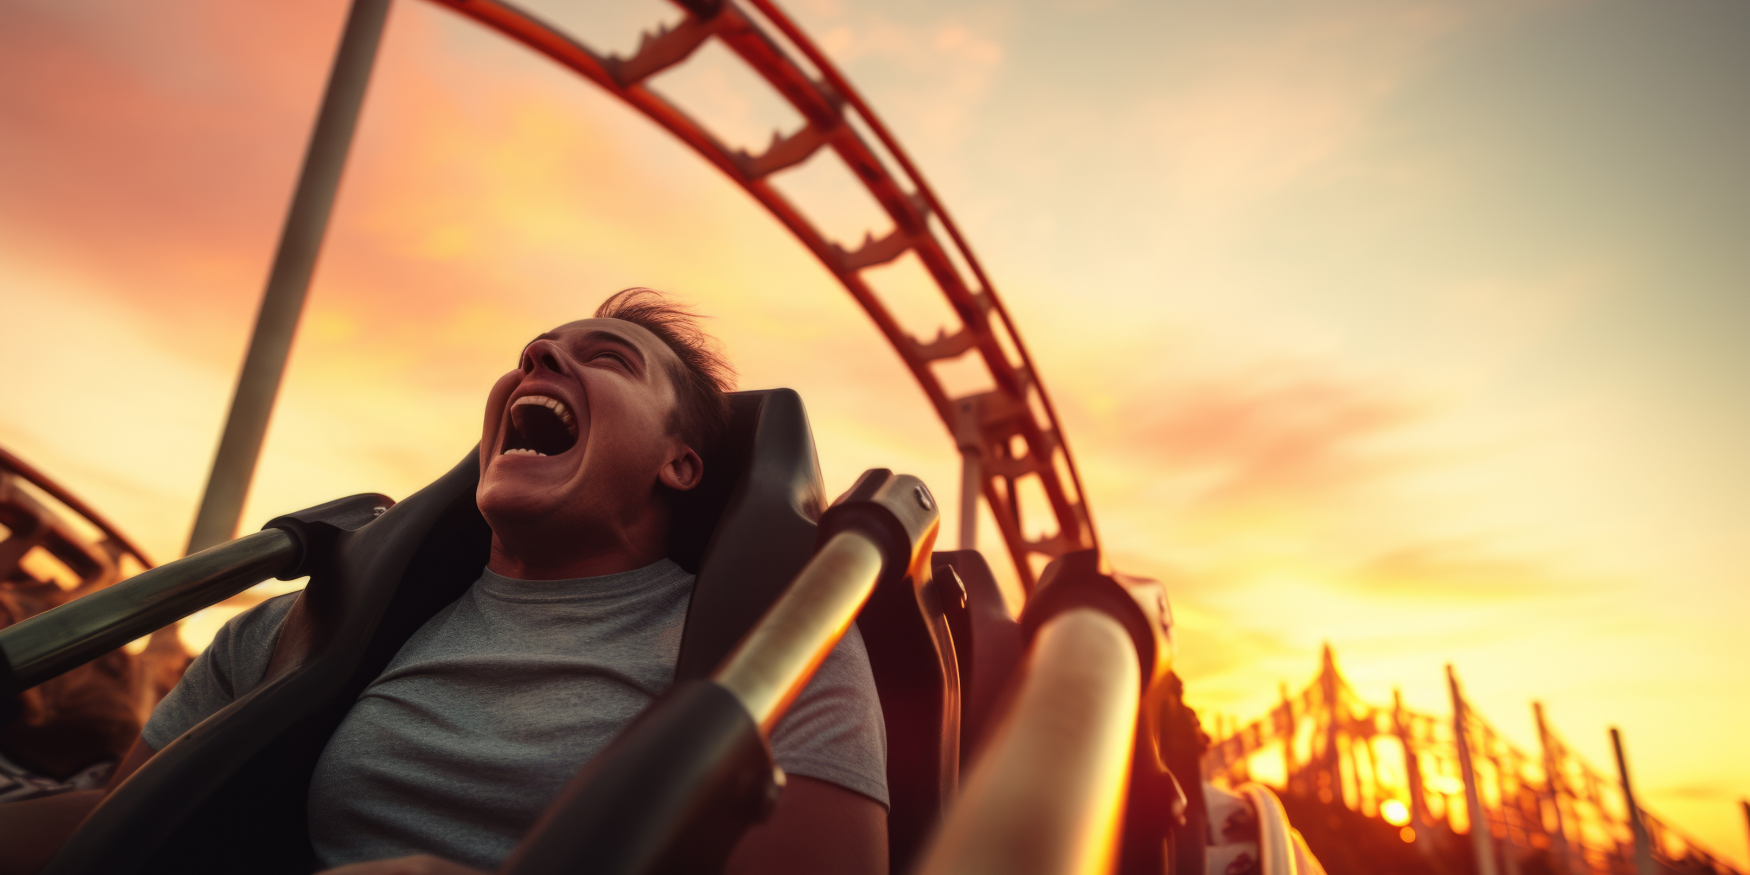 Man enjoying a rollercoaster at sunset